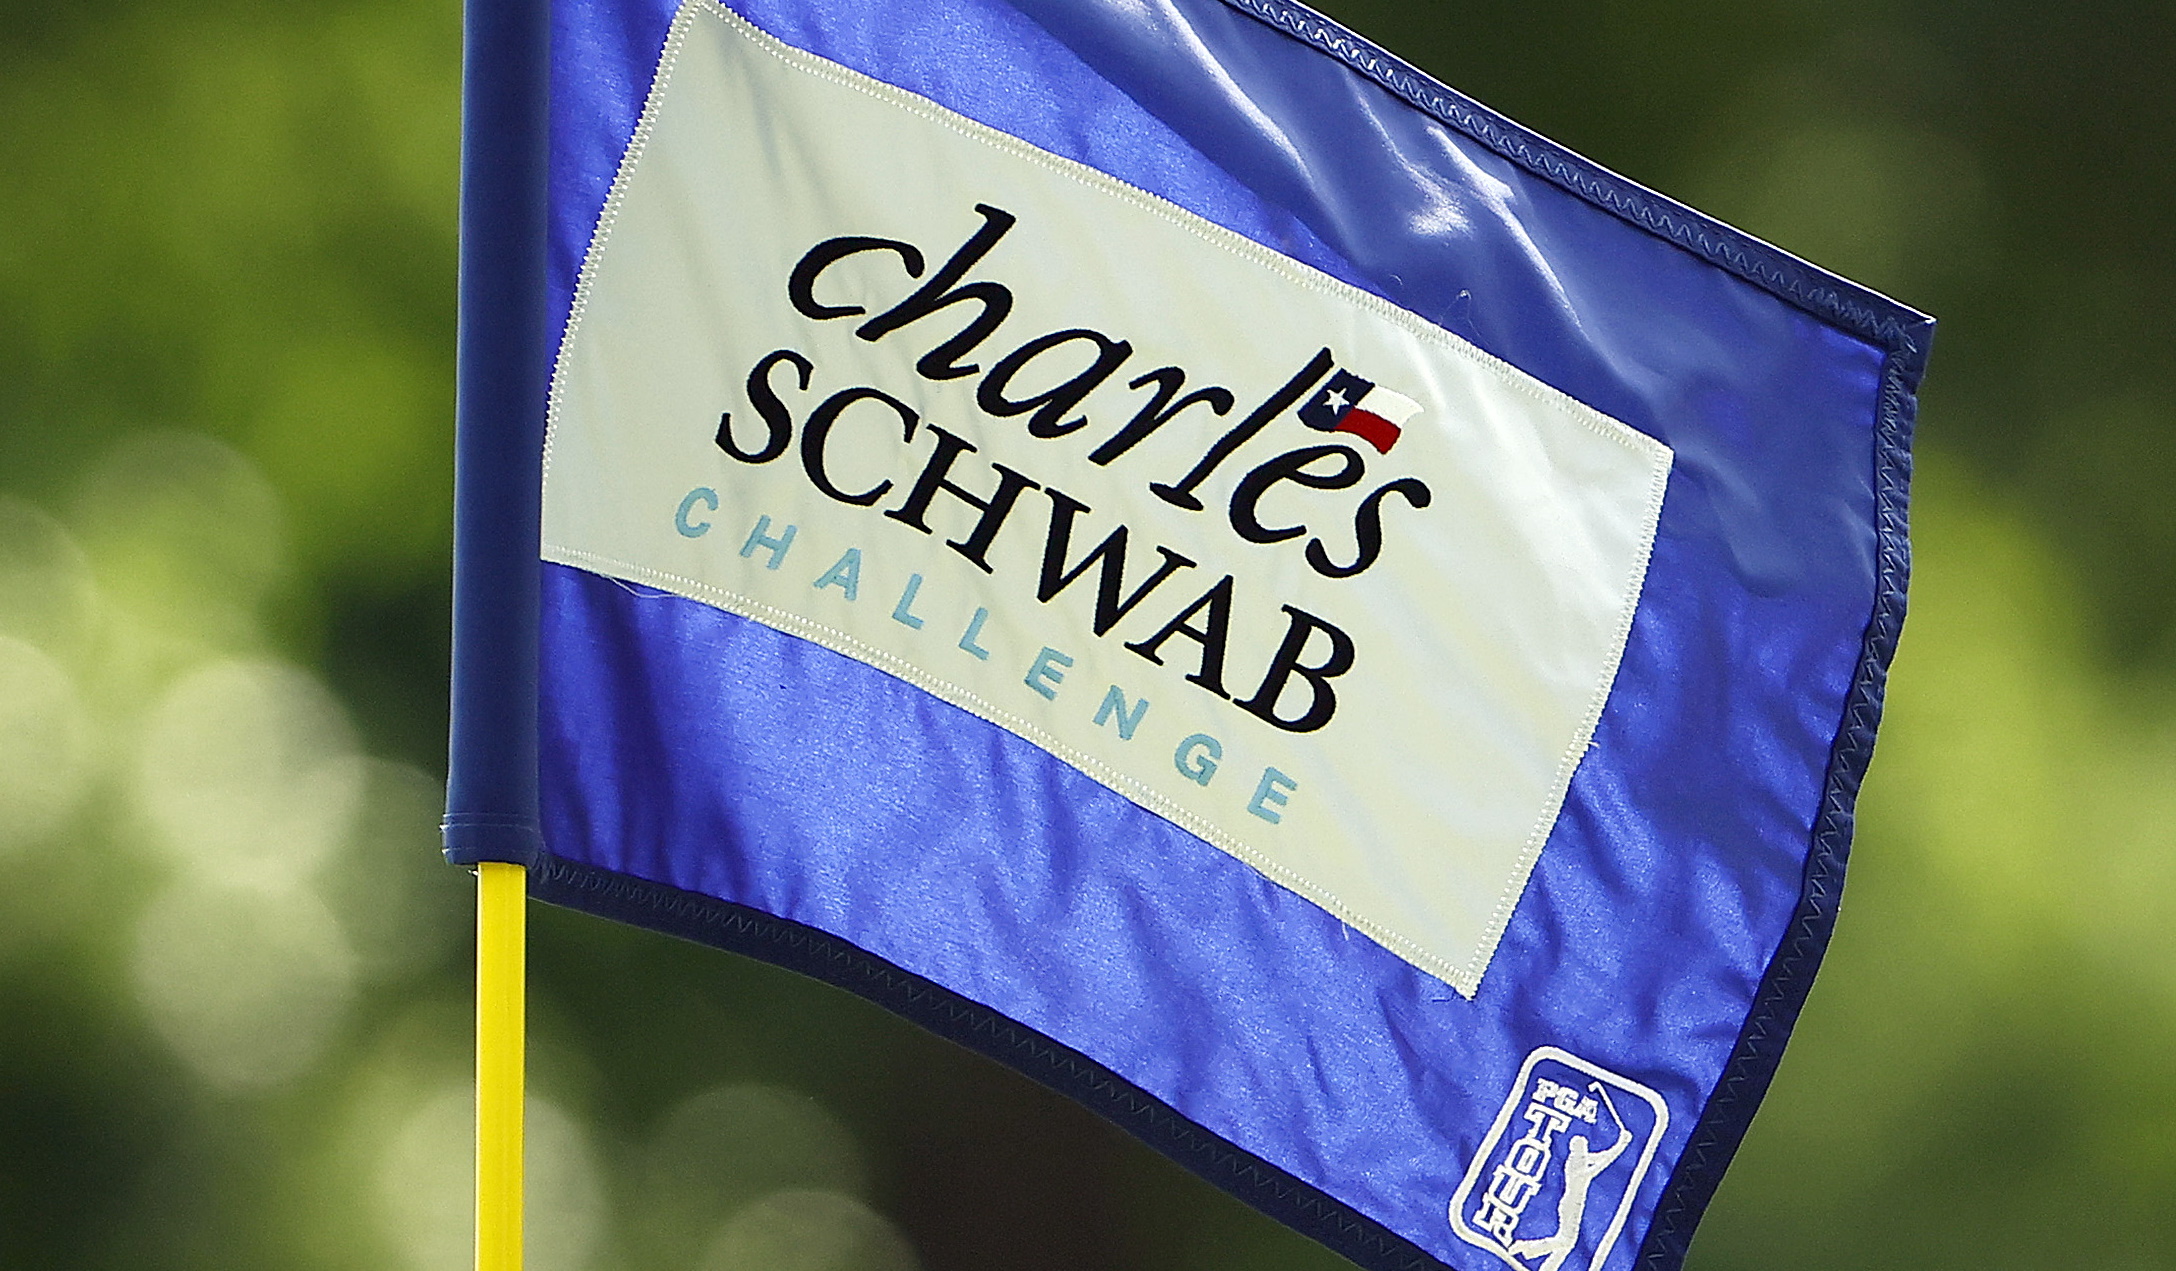 Golf flag at the Charles Schwab challenge PGA tournament